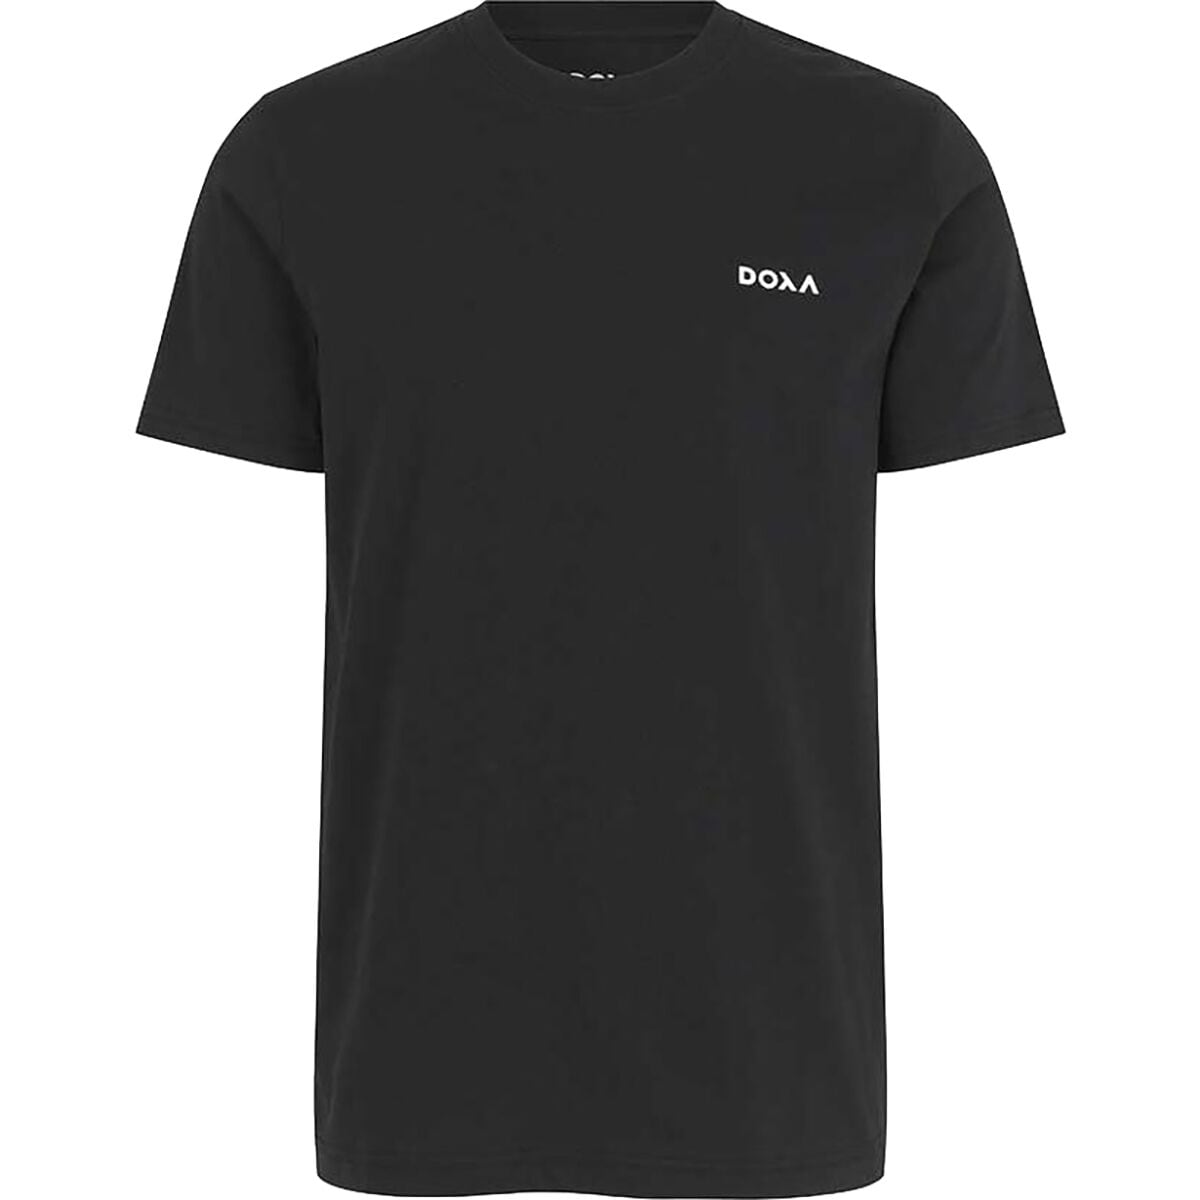 Doxa Run Turner Statement T-Shirt - Men's